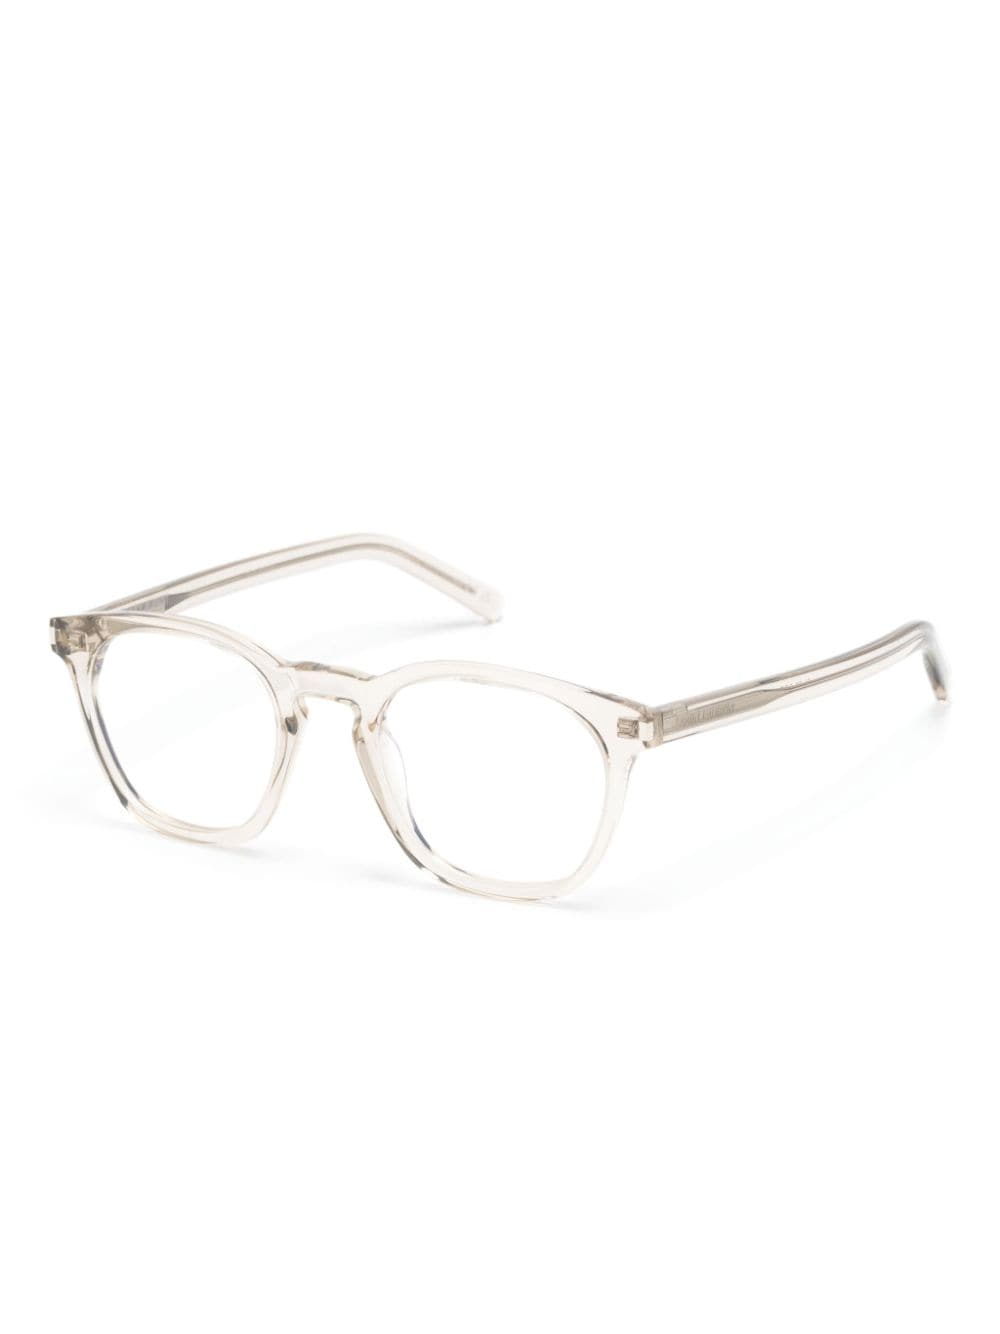 Saint Laurent Eyewear SL 28 bril met vierkant montuur - Grijs